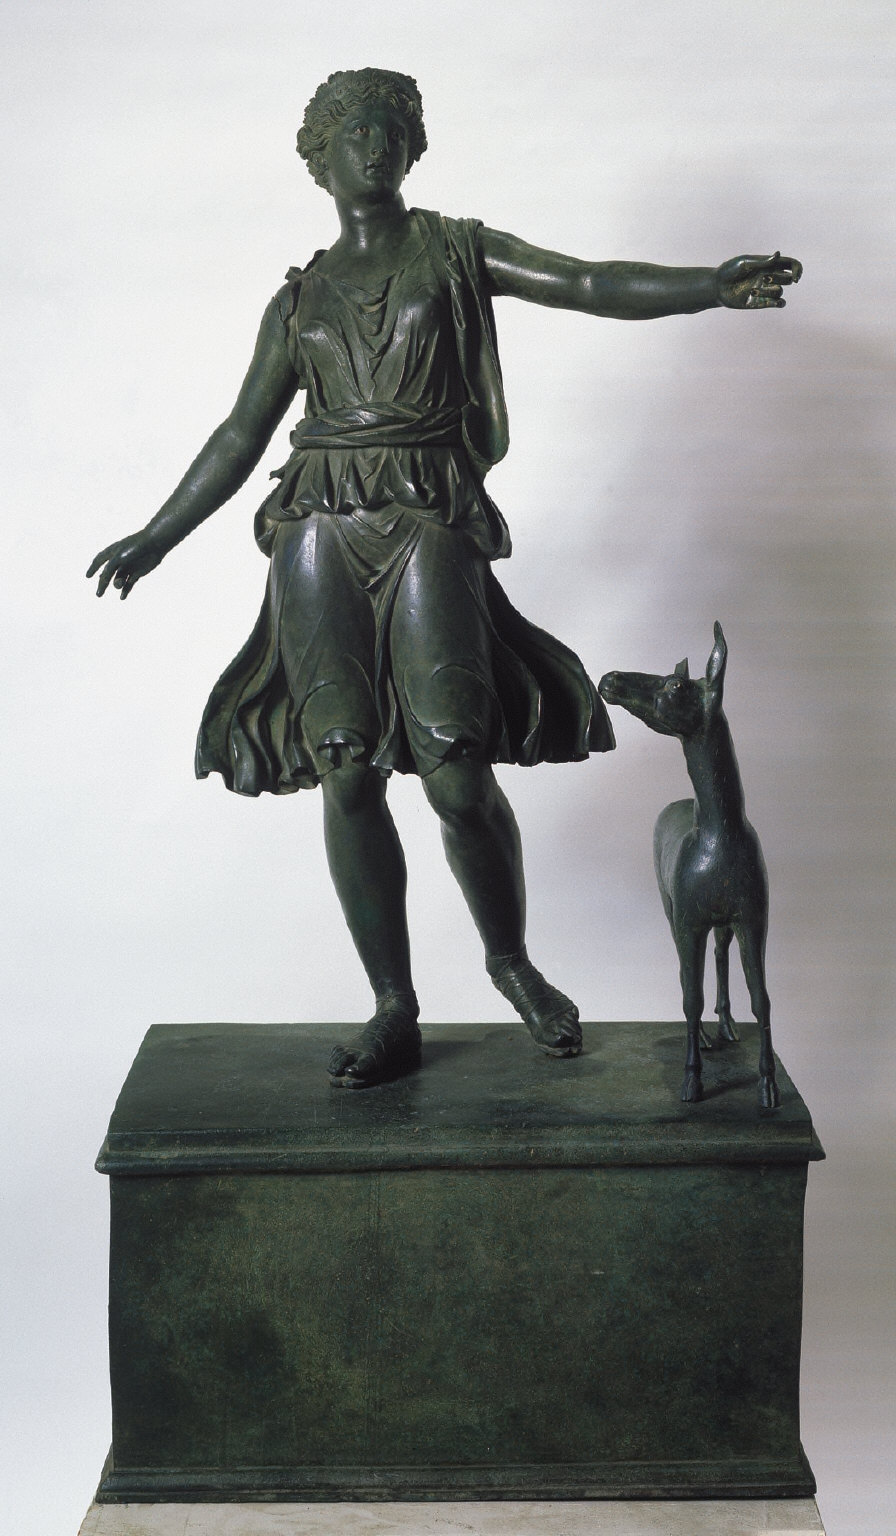 ColorIt - Diana (aka Artemis in Greek), is the Roman goddess of